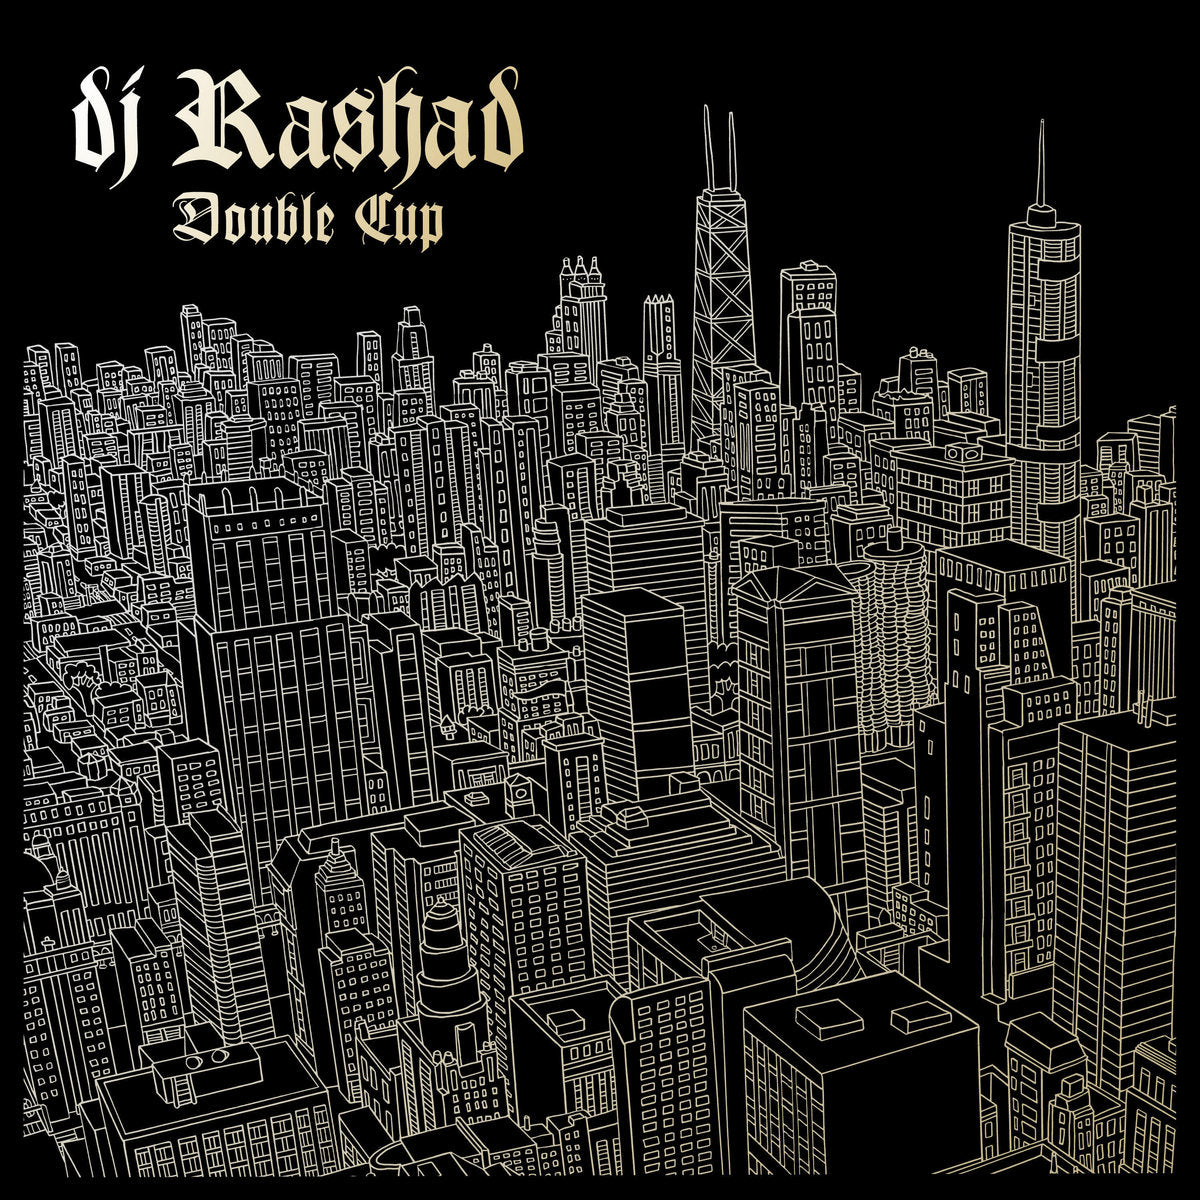 DJ Rashad: Double Cup - Anniversary Edition (Coloured Vinyl 2xLP)